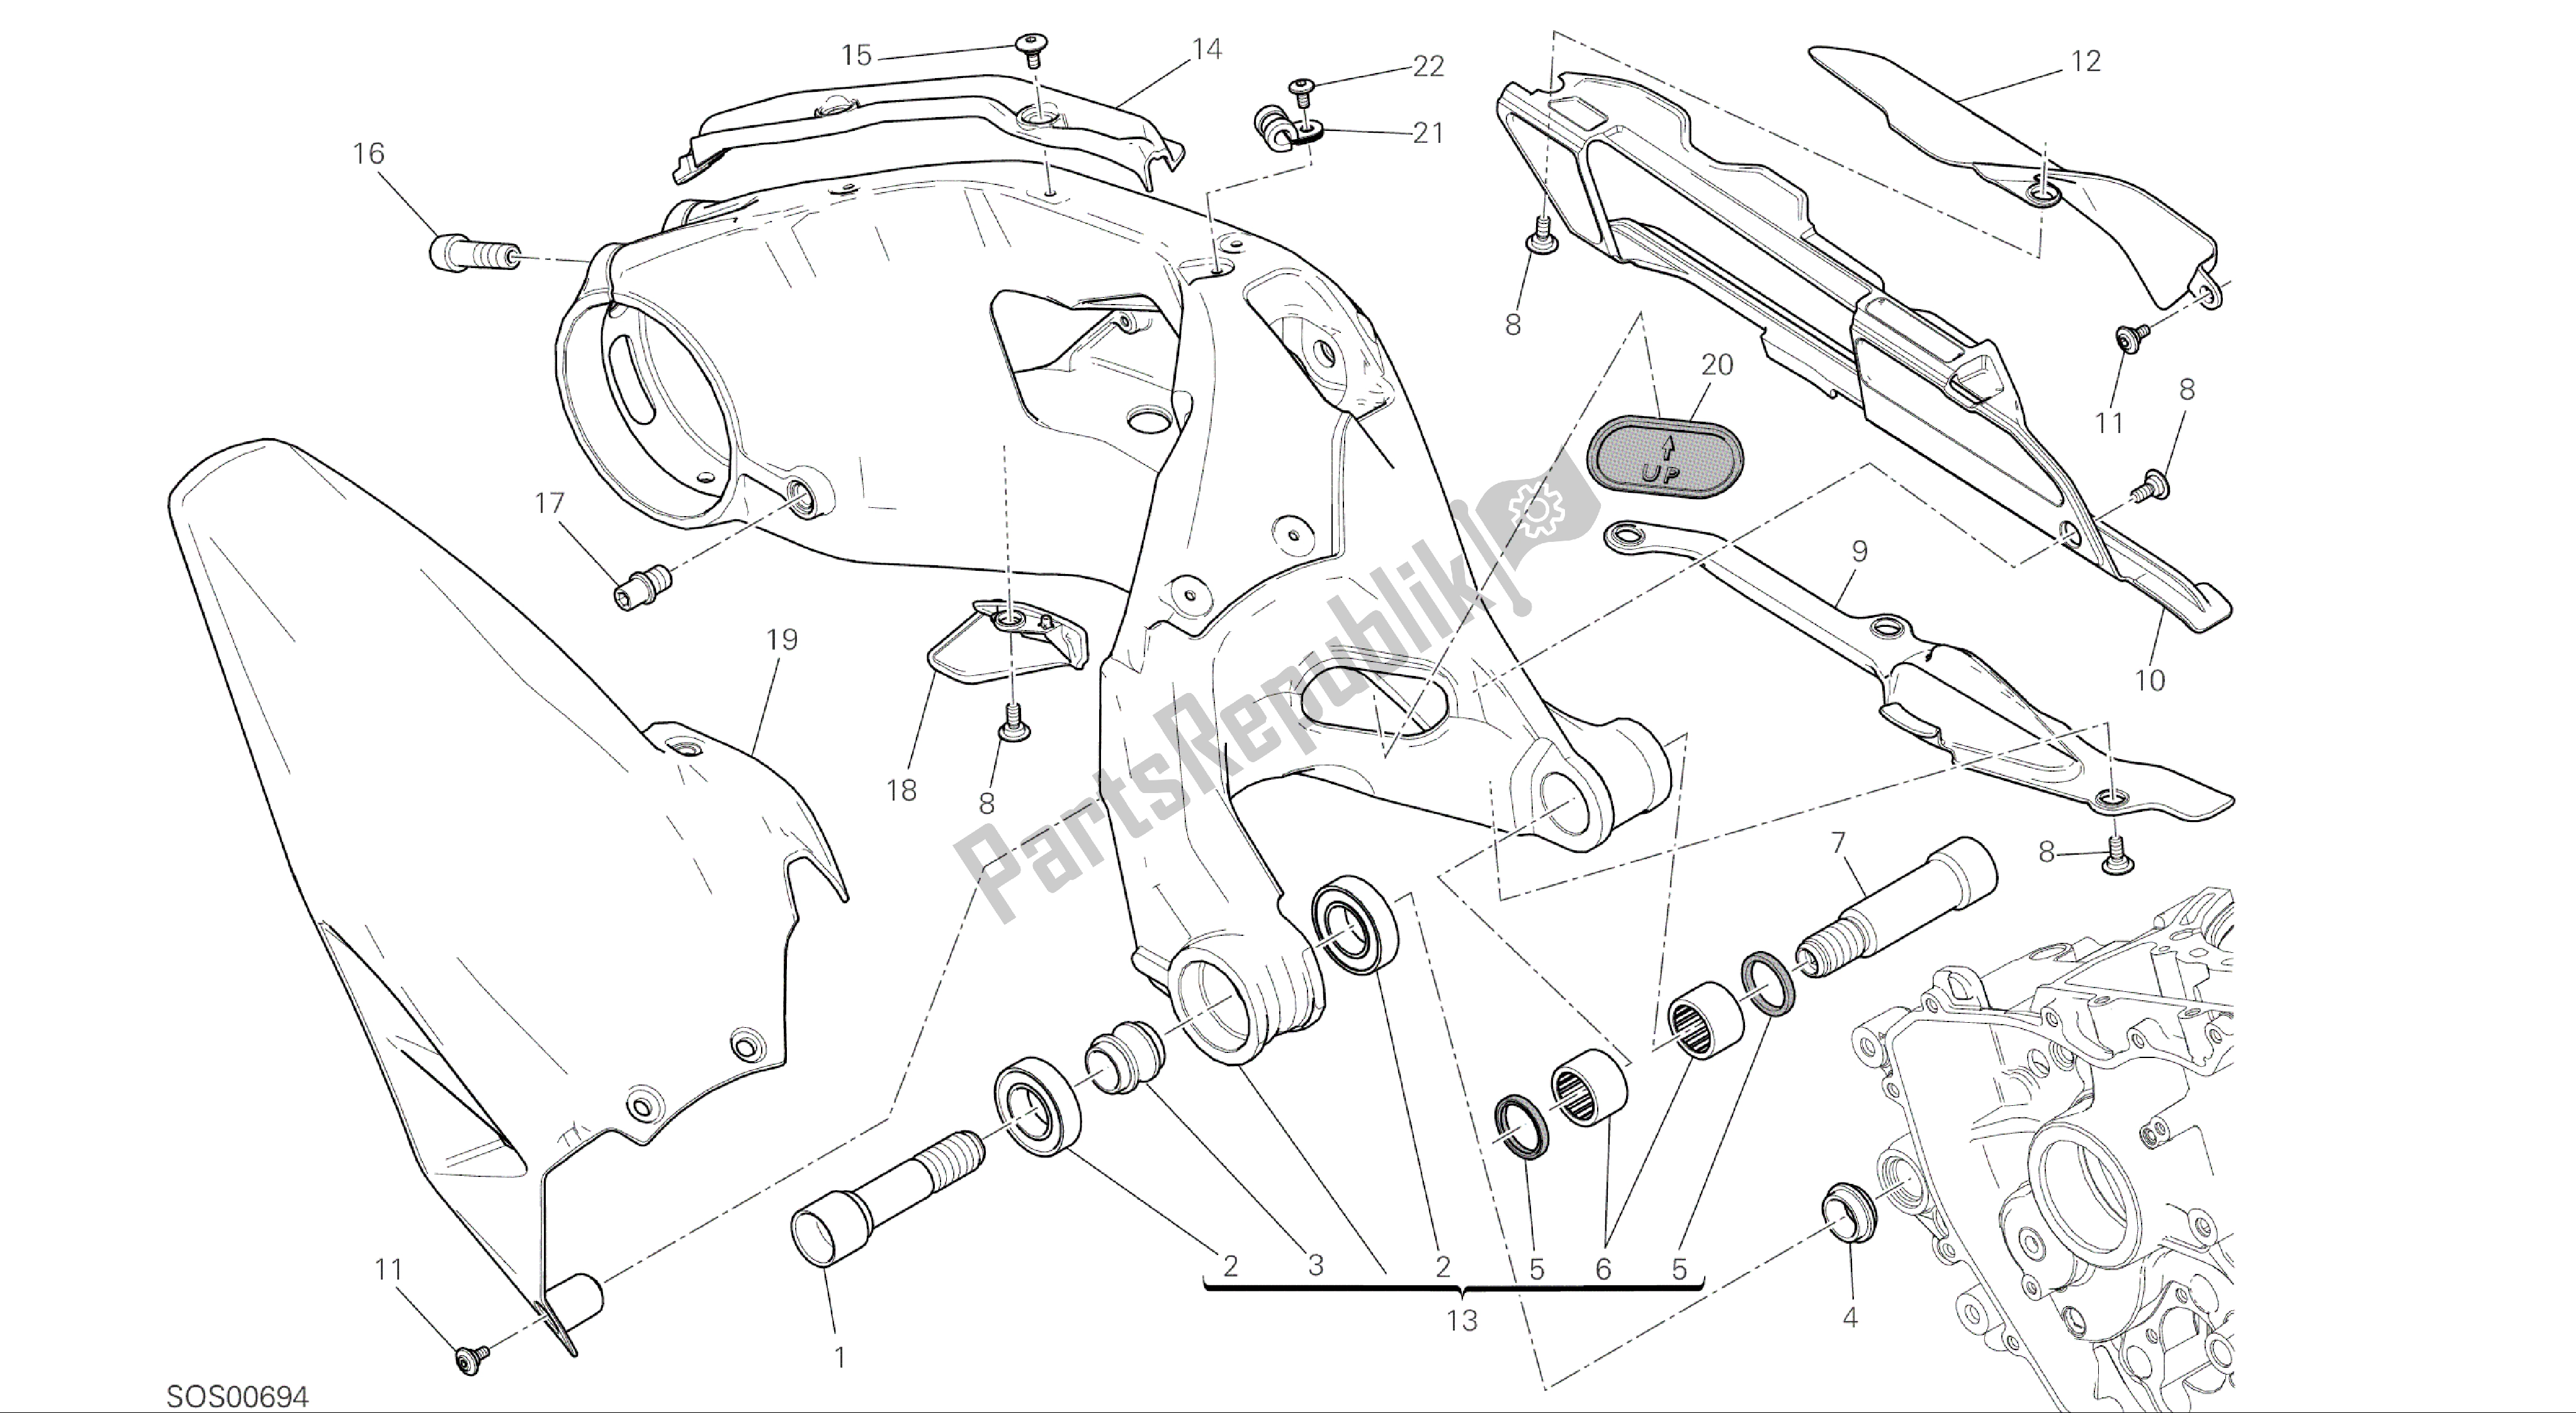 Alle onderdelen voor de Tekening 28a - Forcellone Posteriore [mod: 1299; Xst: Aus, Eur, Fra, Jap, Twn] Groepsframe van de Ducati Panigale ABS 1299 2016